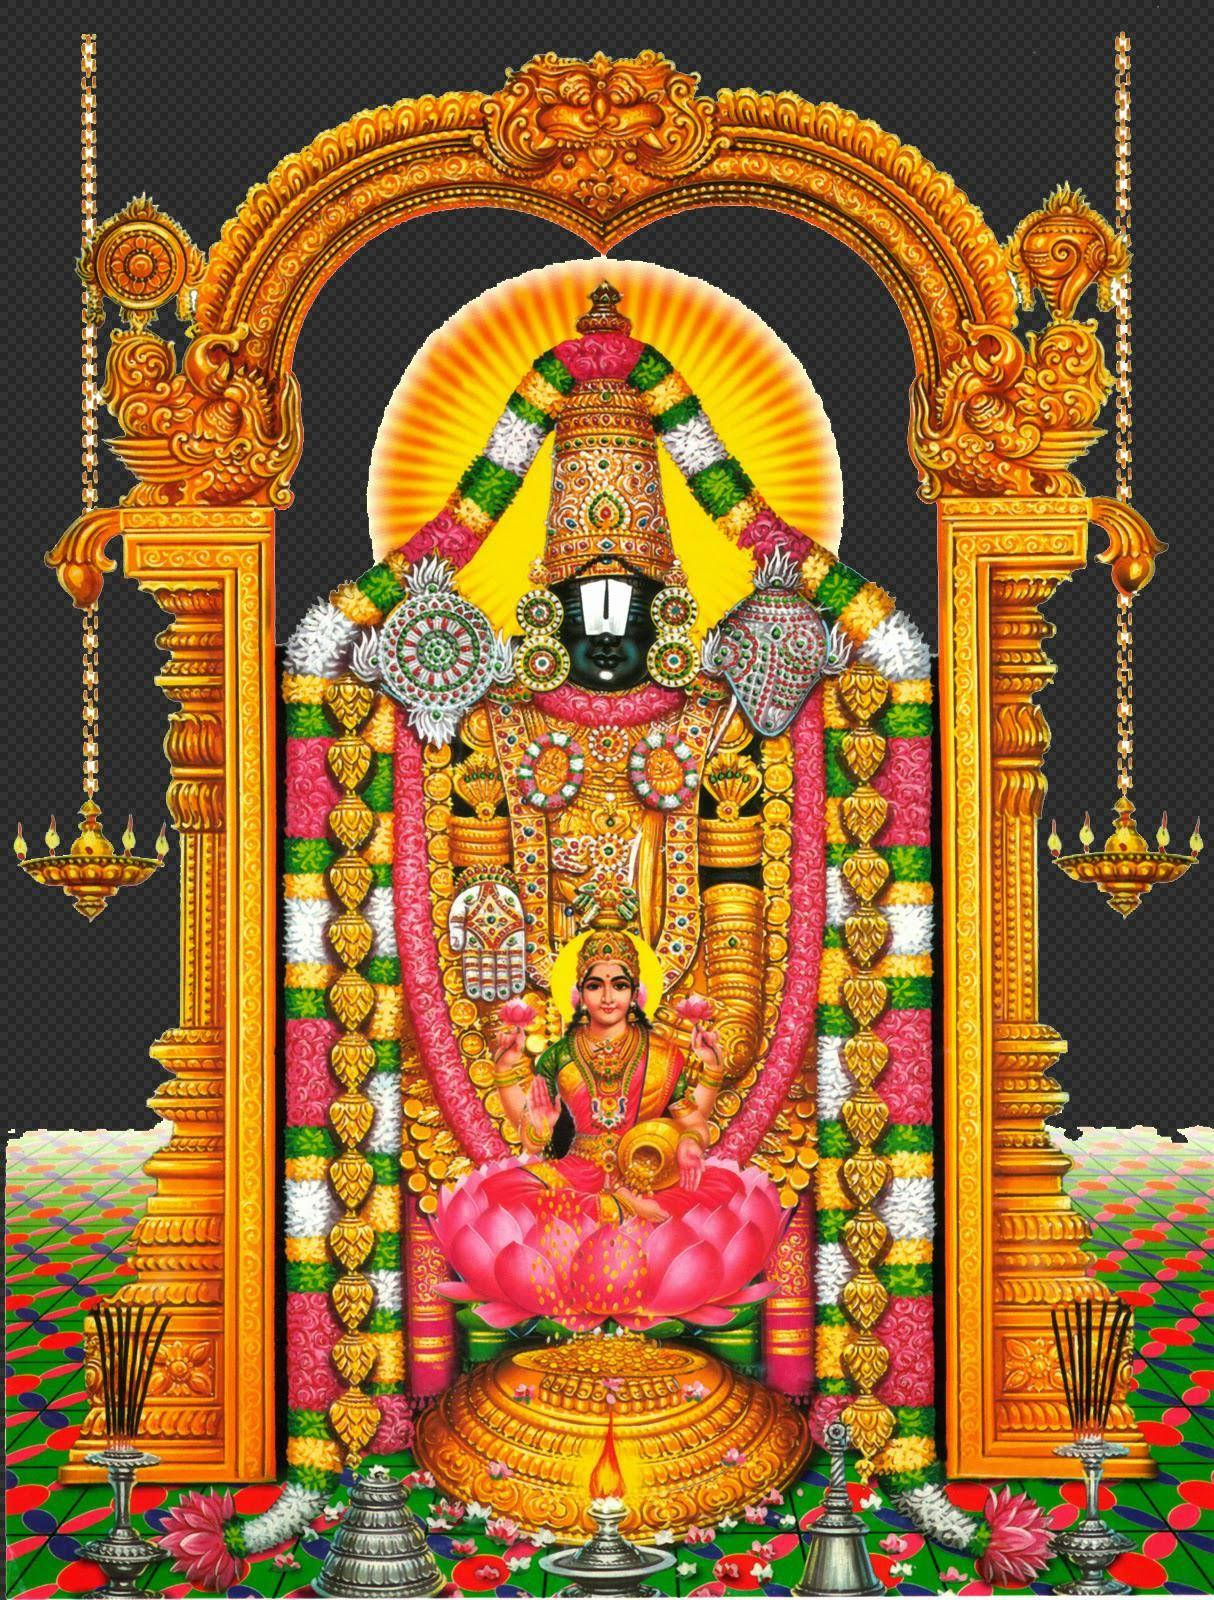 Venkateswara Swamy Deity Of The Tirumala